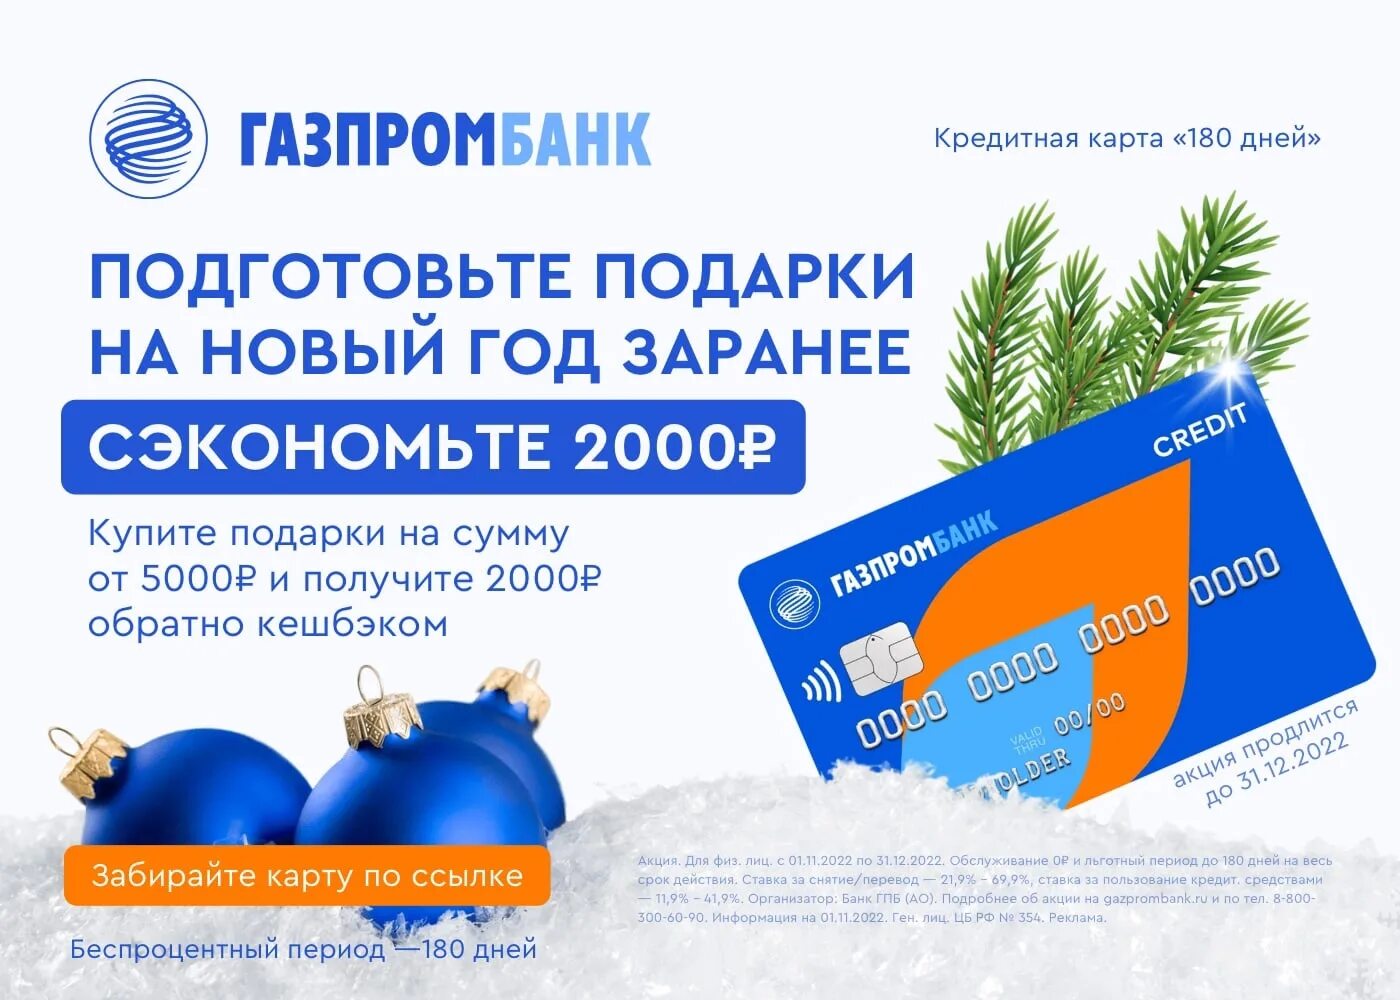 Кредитка Газпромбанка 180. Газпромбанк 180 дней. Кредитная карта Газпромбанк 180 дней. Дебетовая карта Unionpay - Газпромбанк.